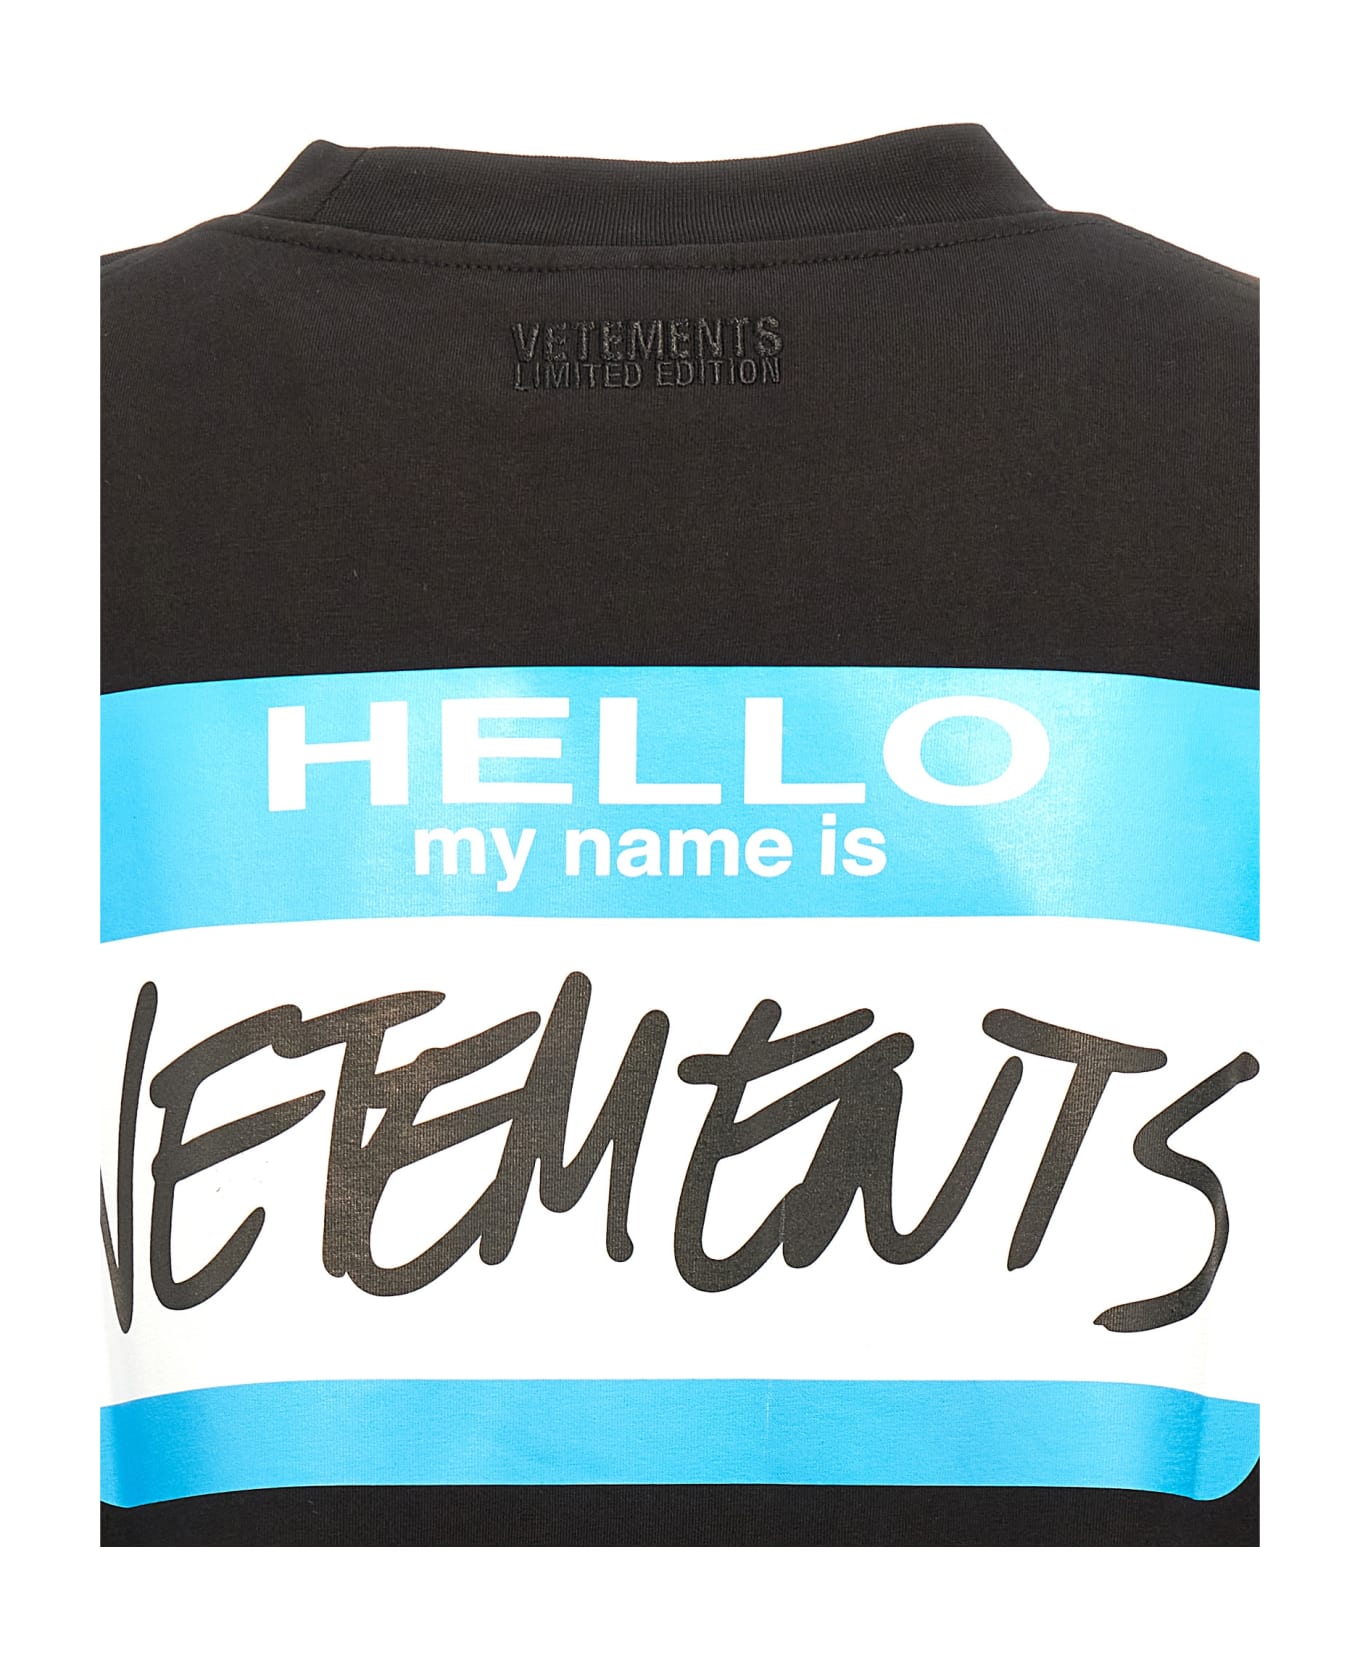 VETEMENTS 'my Name Is Vetements' T-shirt - BLACK